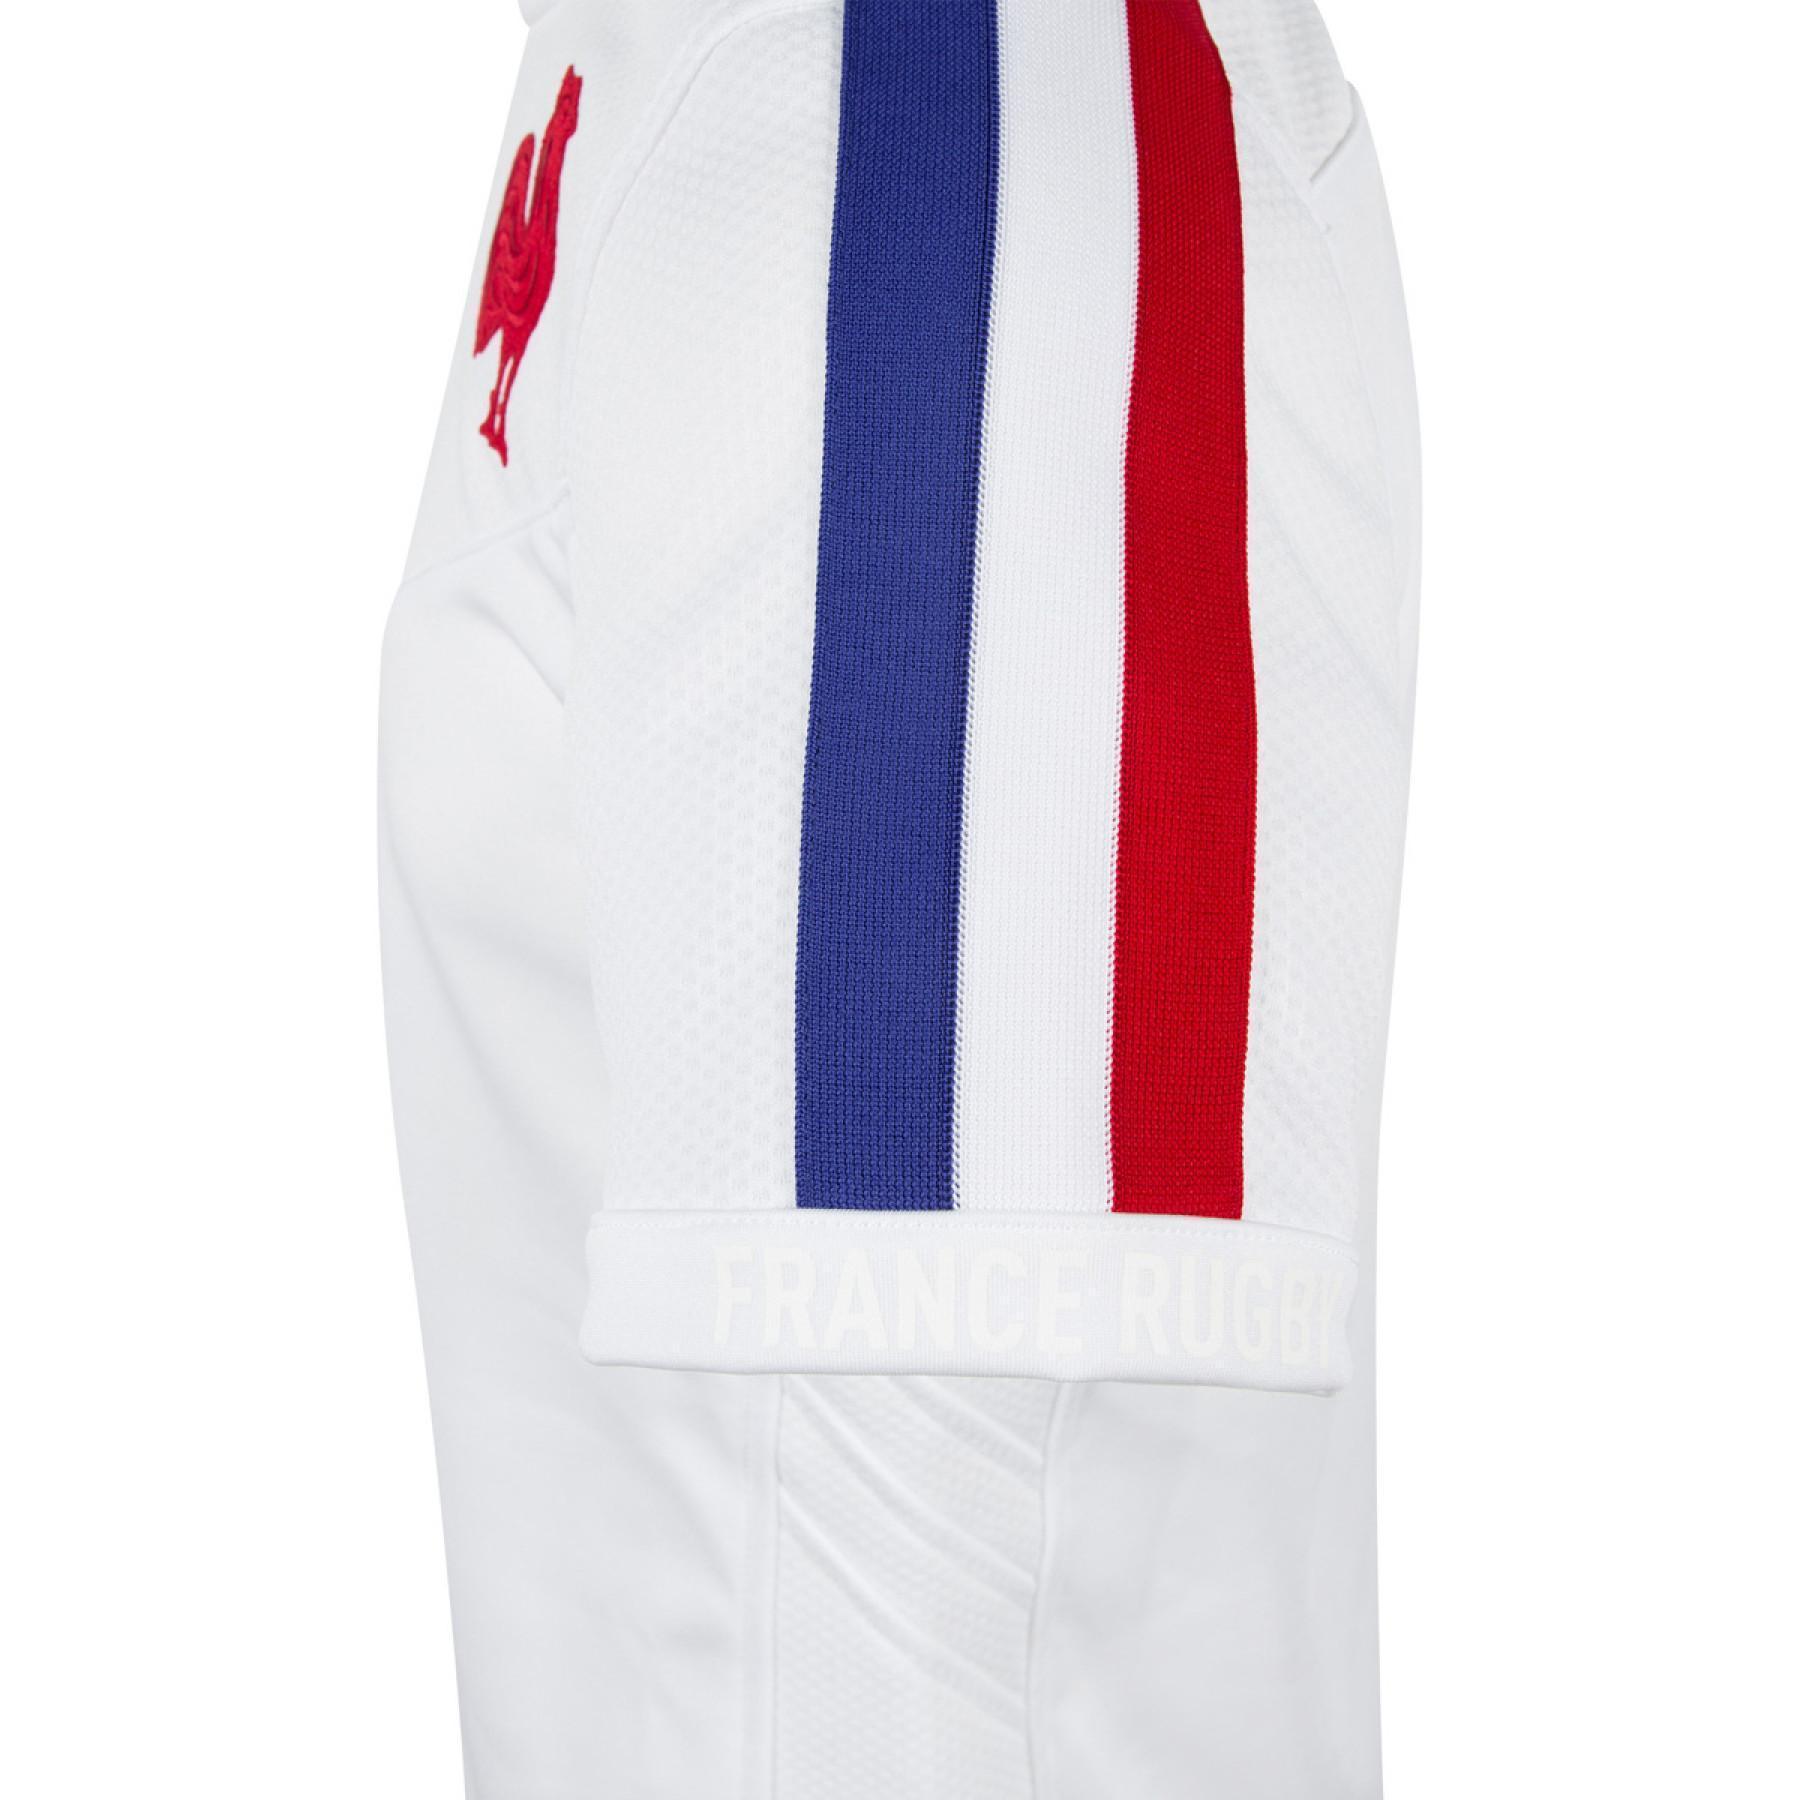 xv replica jersey of France